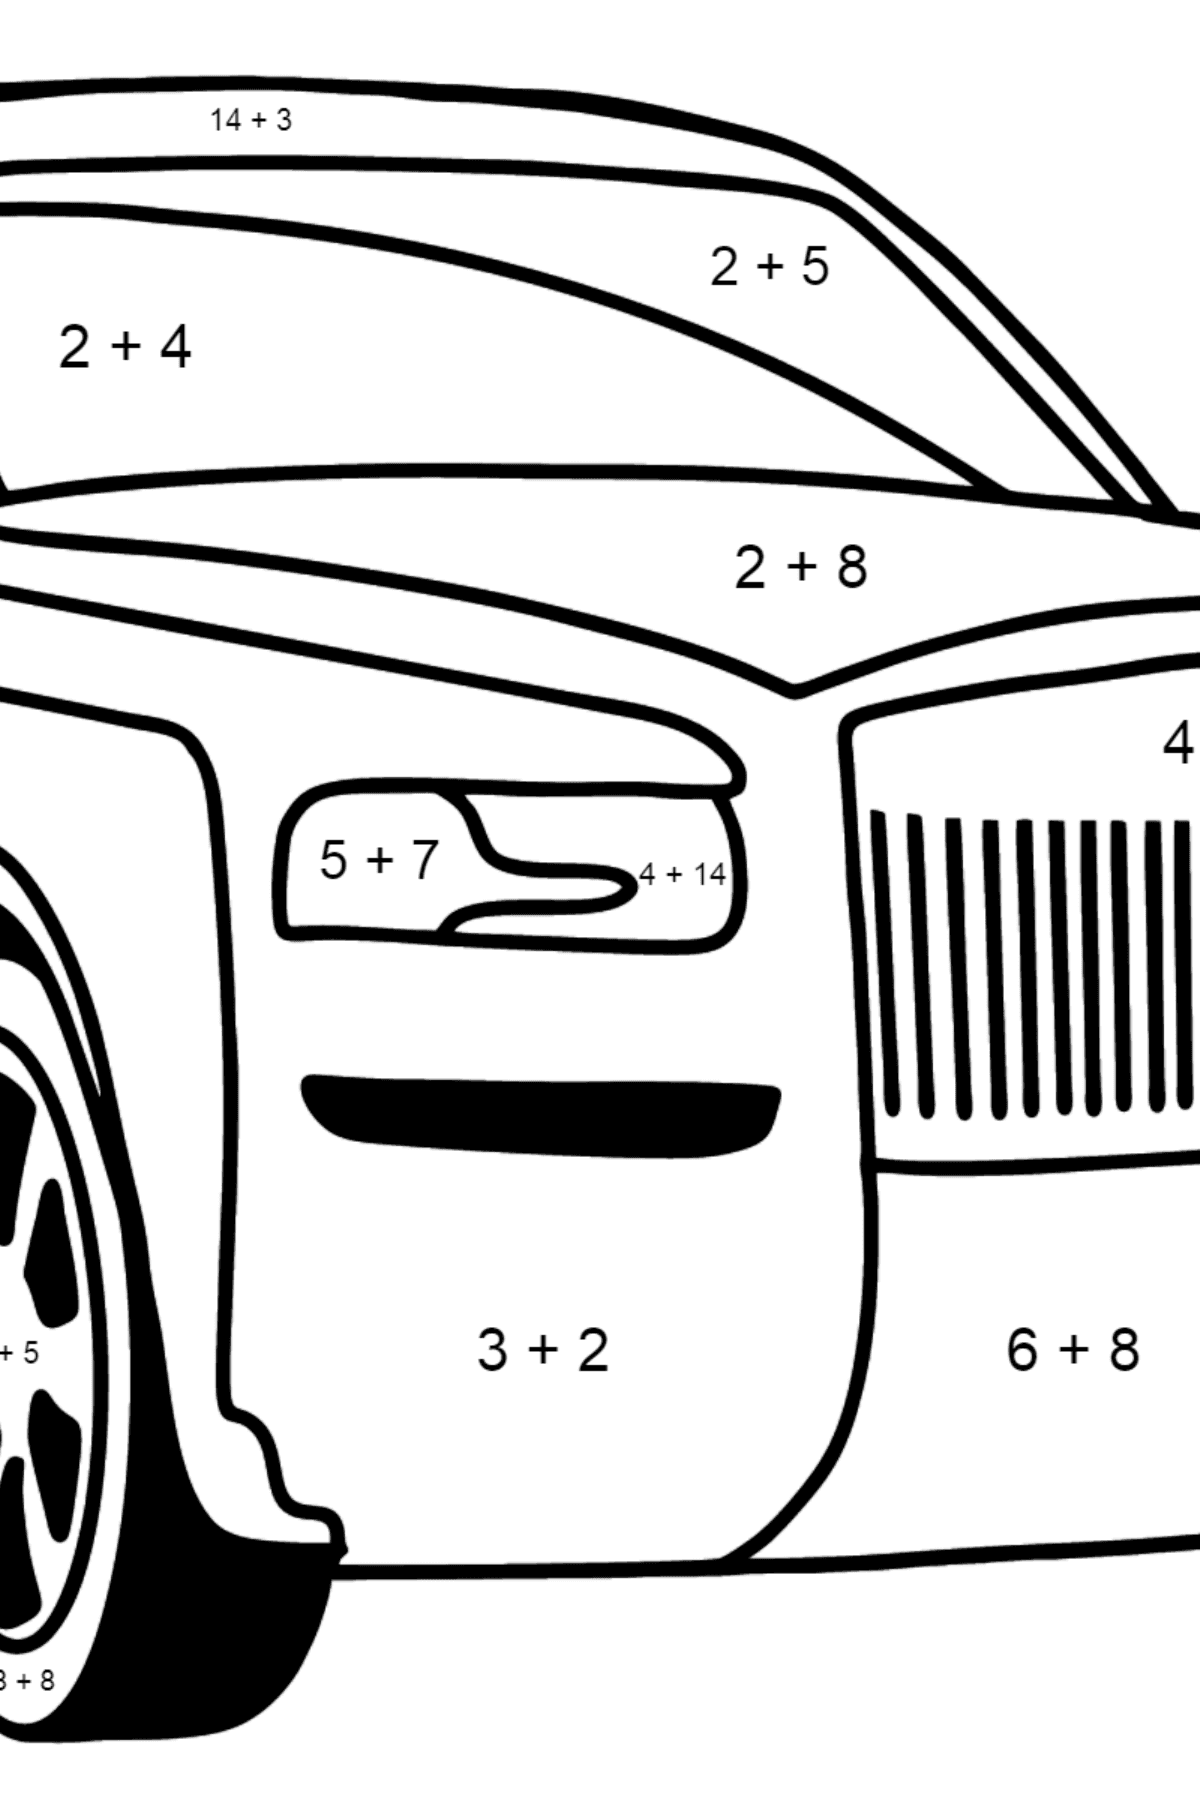 Mewarnai gambar mobil Rolls Royce Cullinan - Pewarnaan Matematika: Pertambahan untuk anak-anak